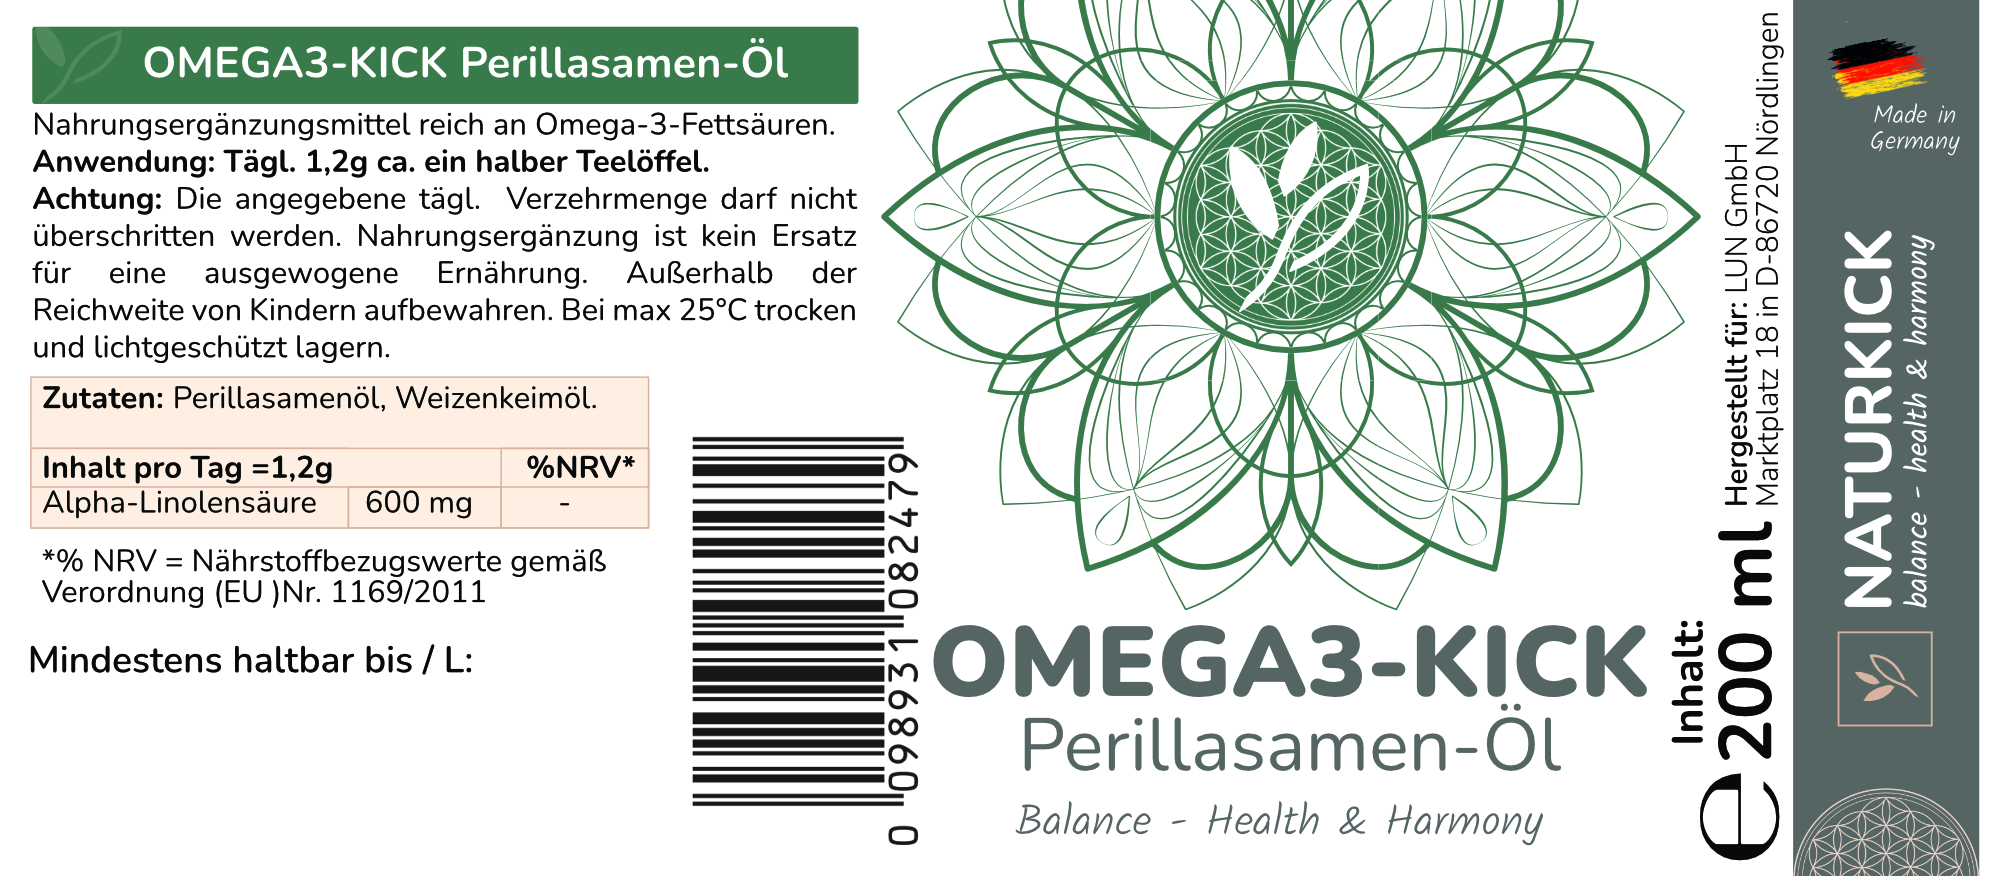 NATURKICK Omega-3-Kick Perillasamen-Öl 200 ml